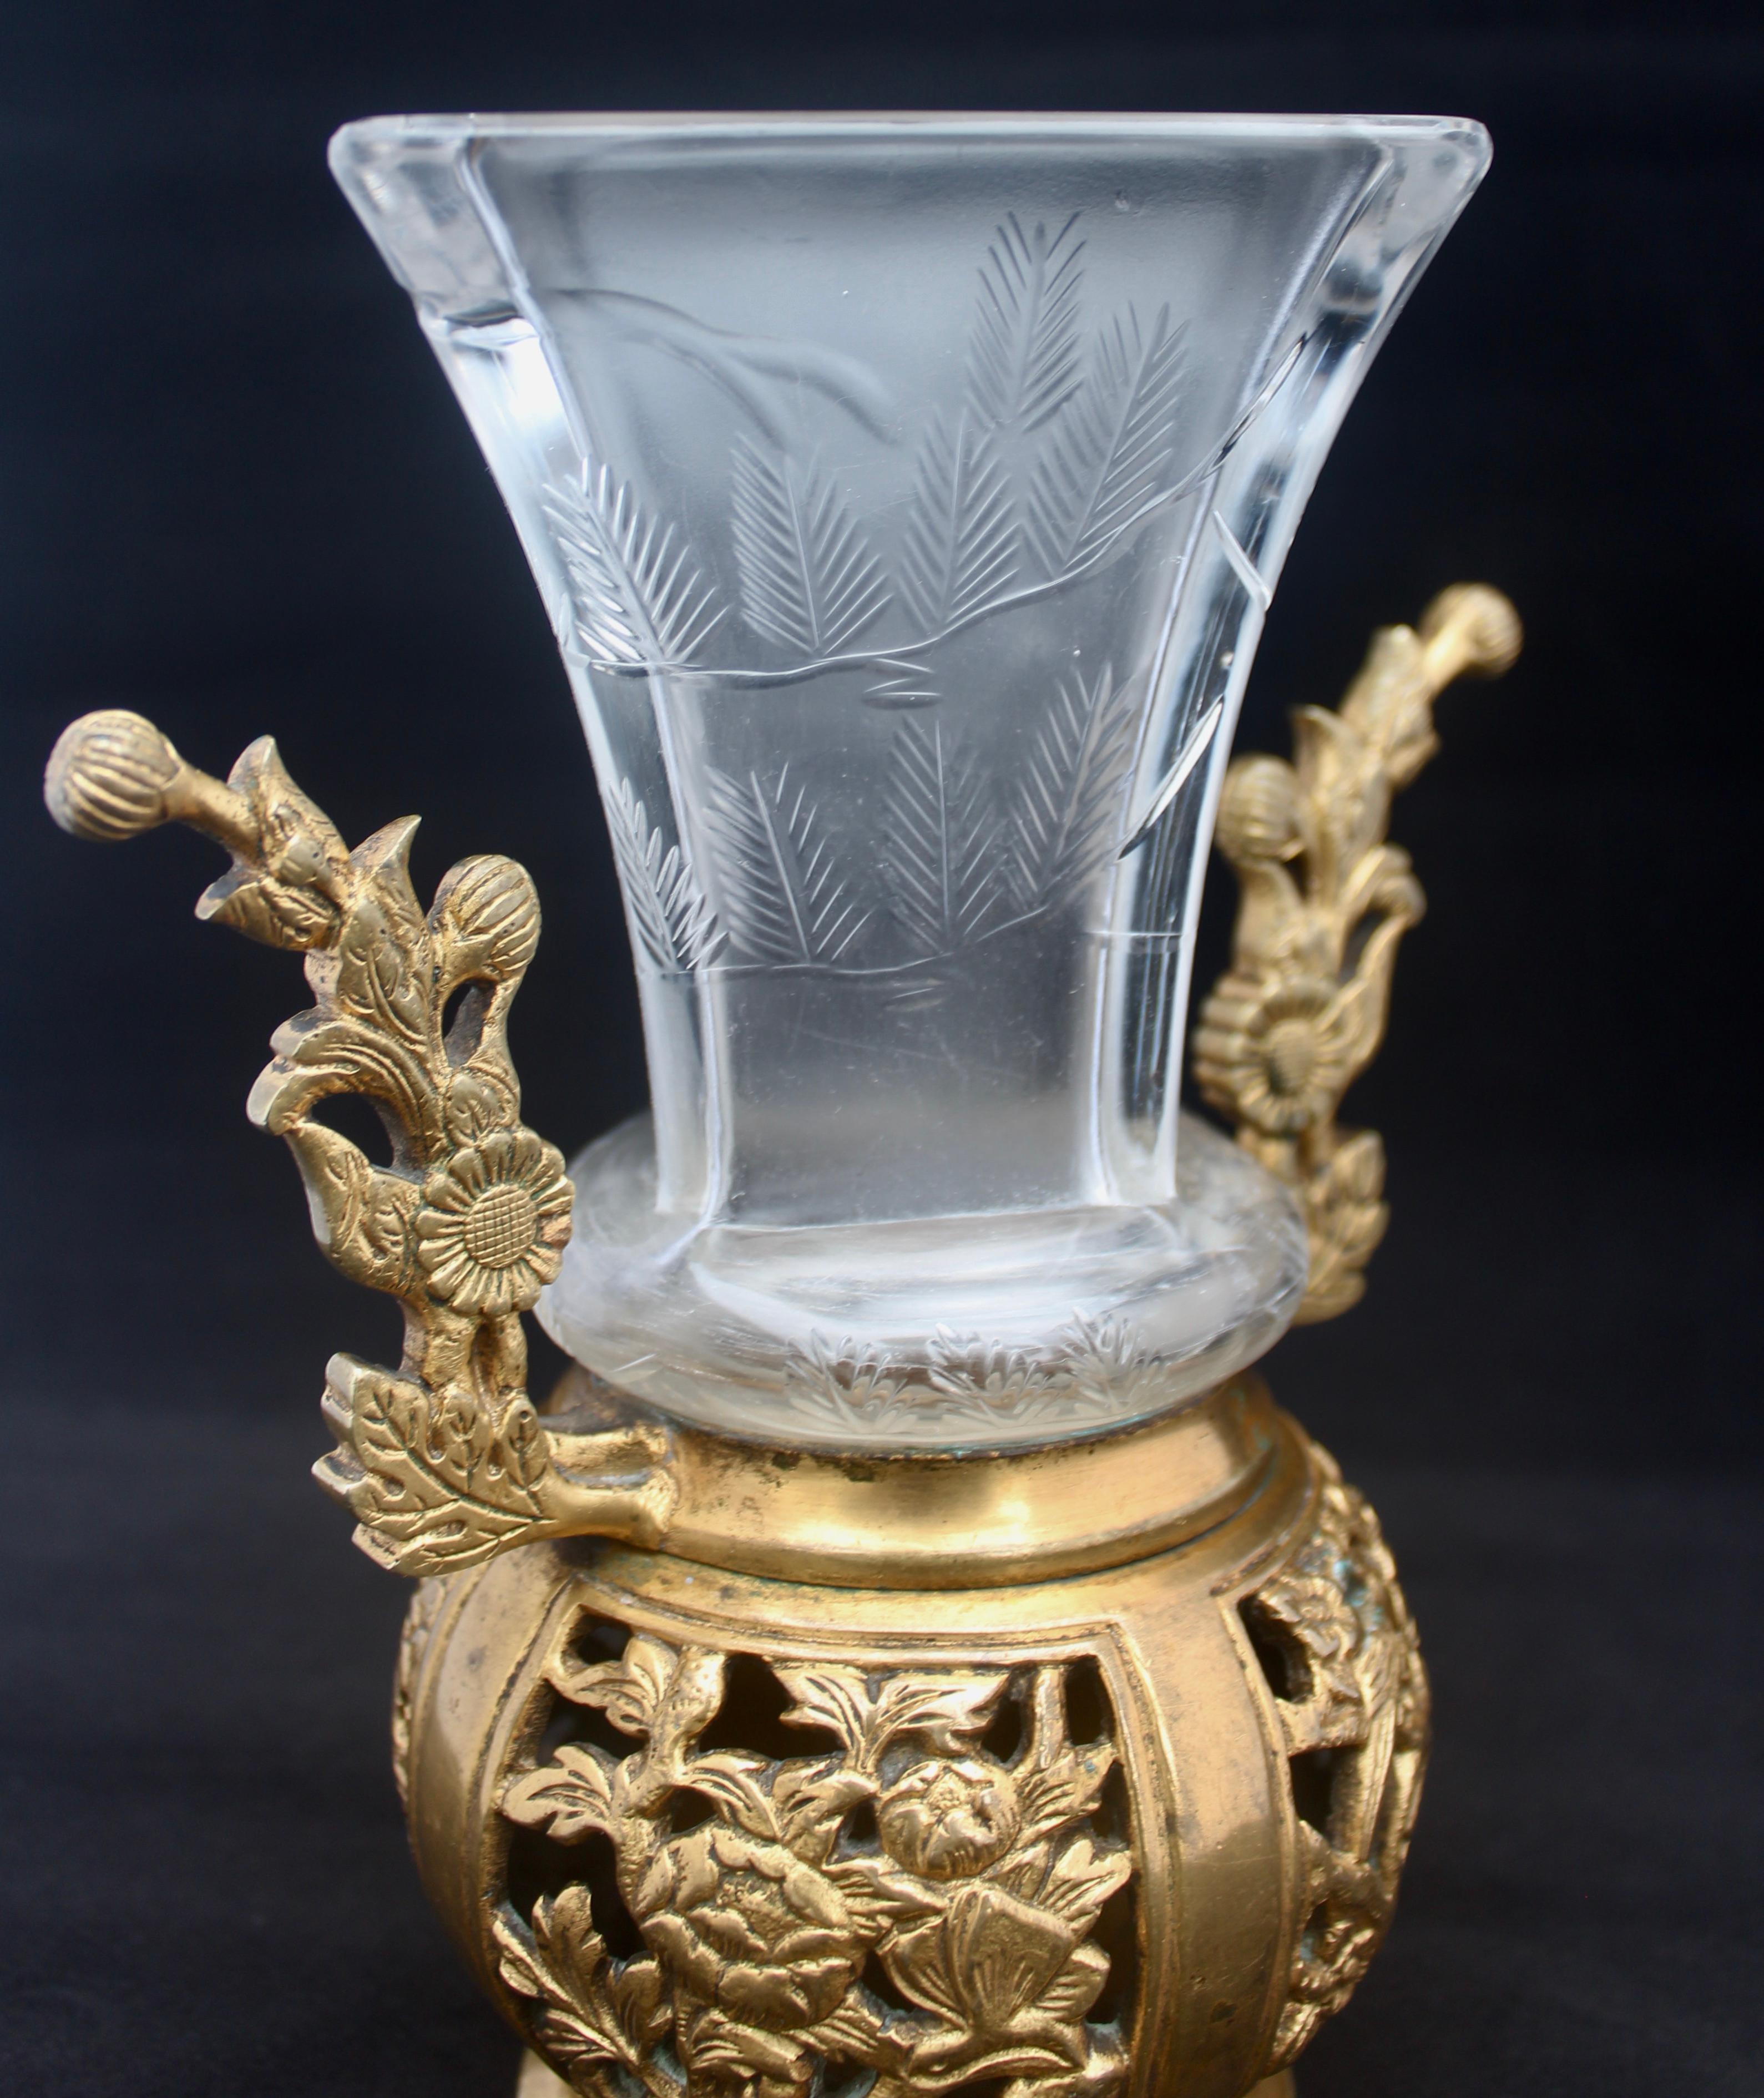 French Japonisme Crystal Vase, Ormolu Mount by Maison Baccarat for Escalier De Cristal